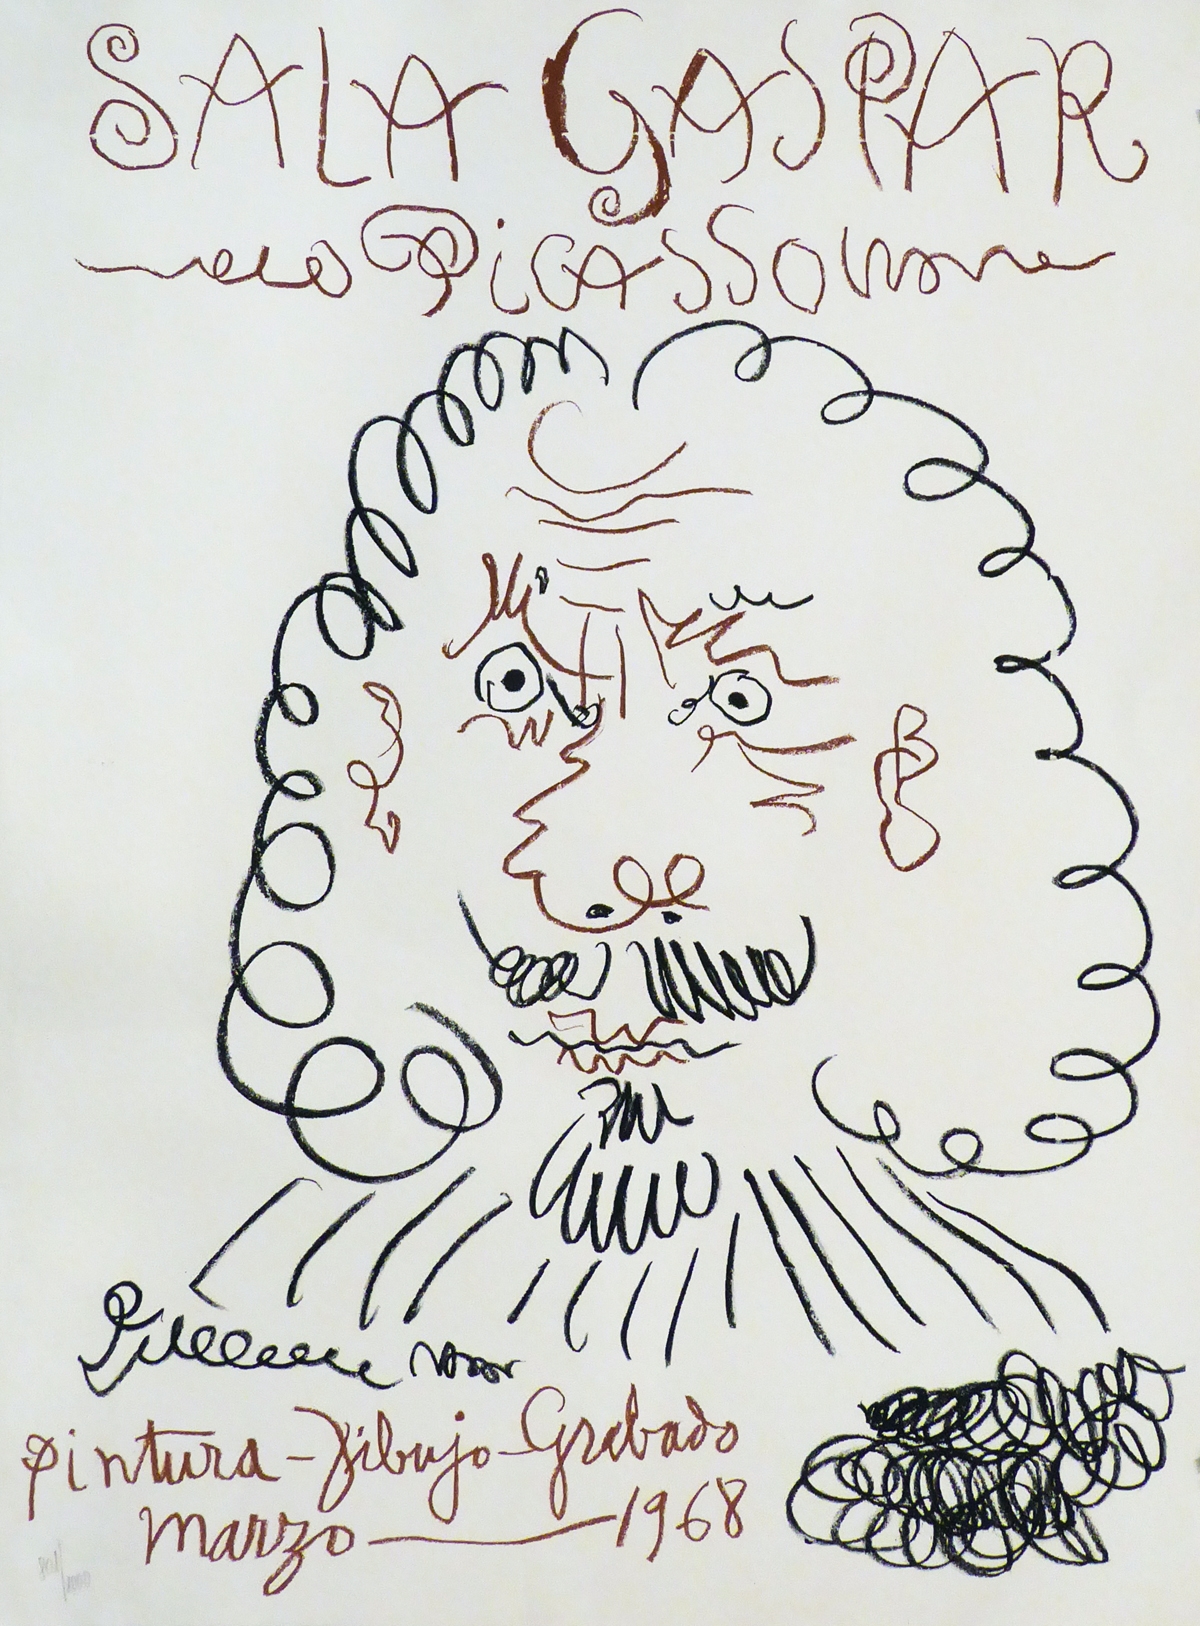 Sala Gaspar. Pintura-Dibujo-Grabado by Pablo Picasso, 1968